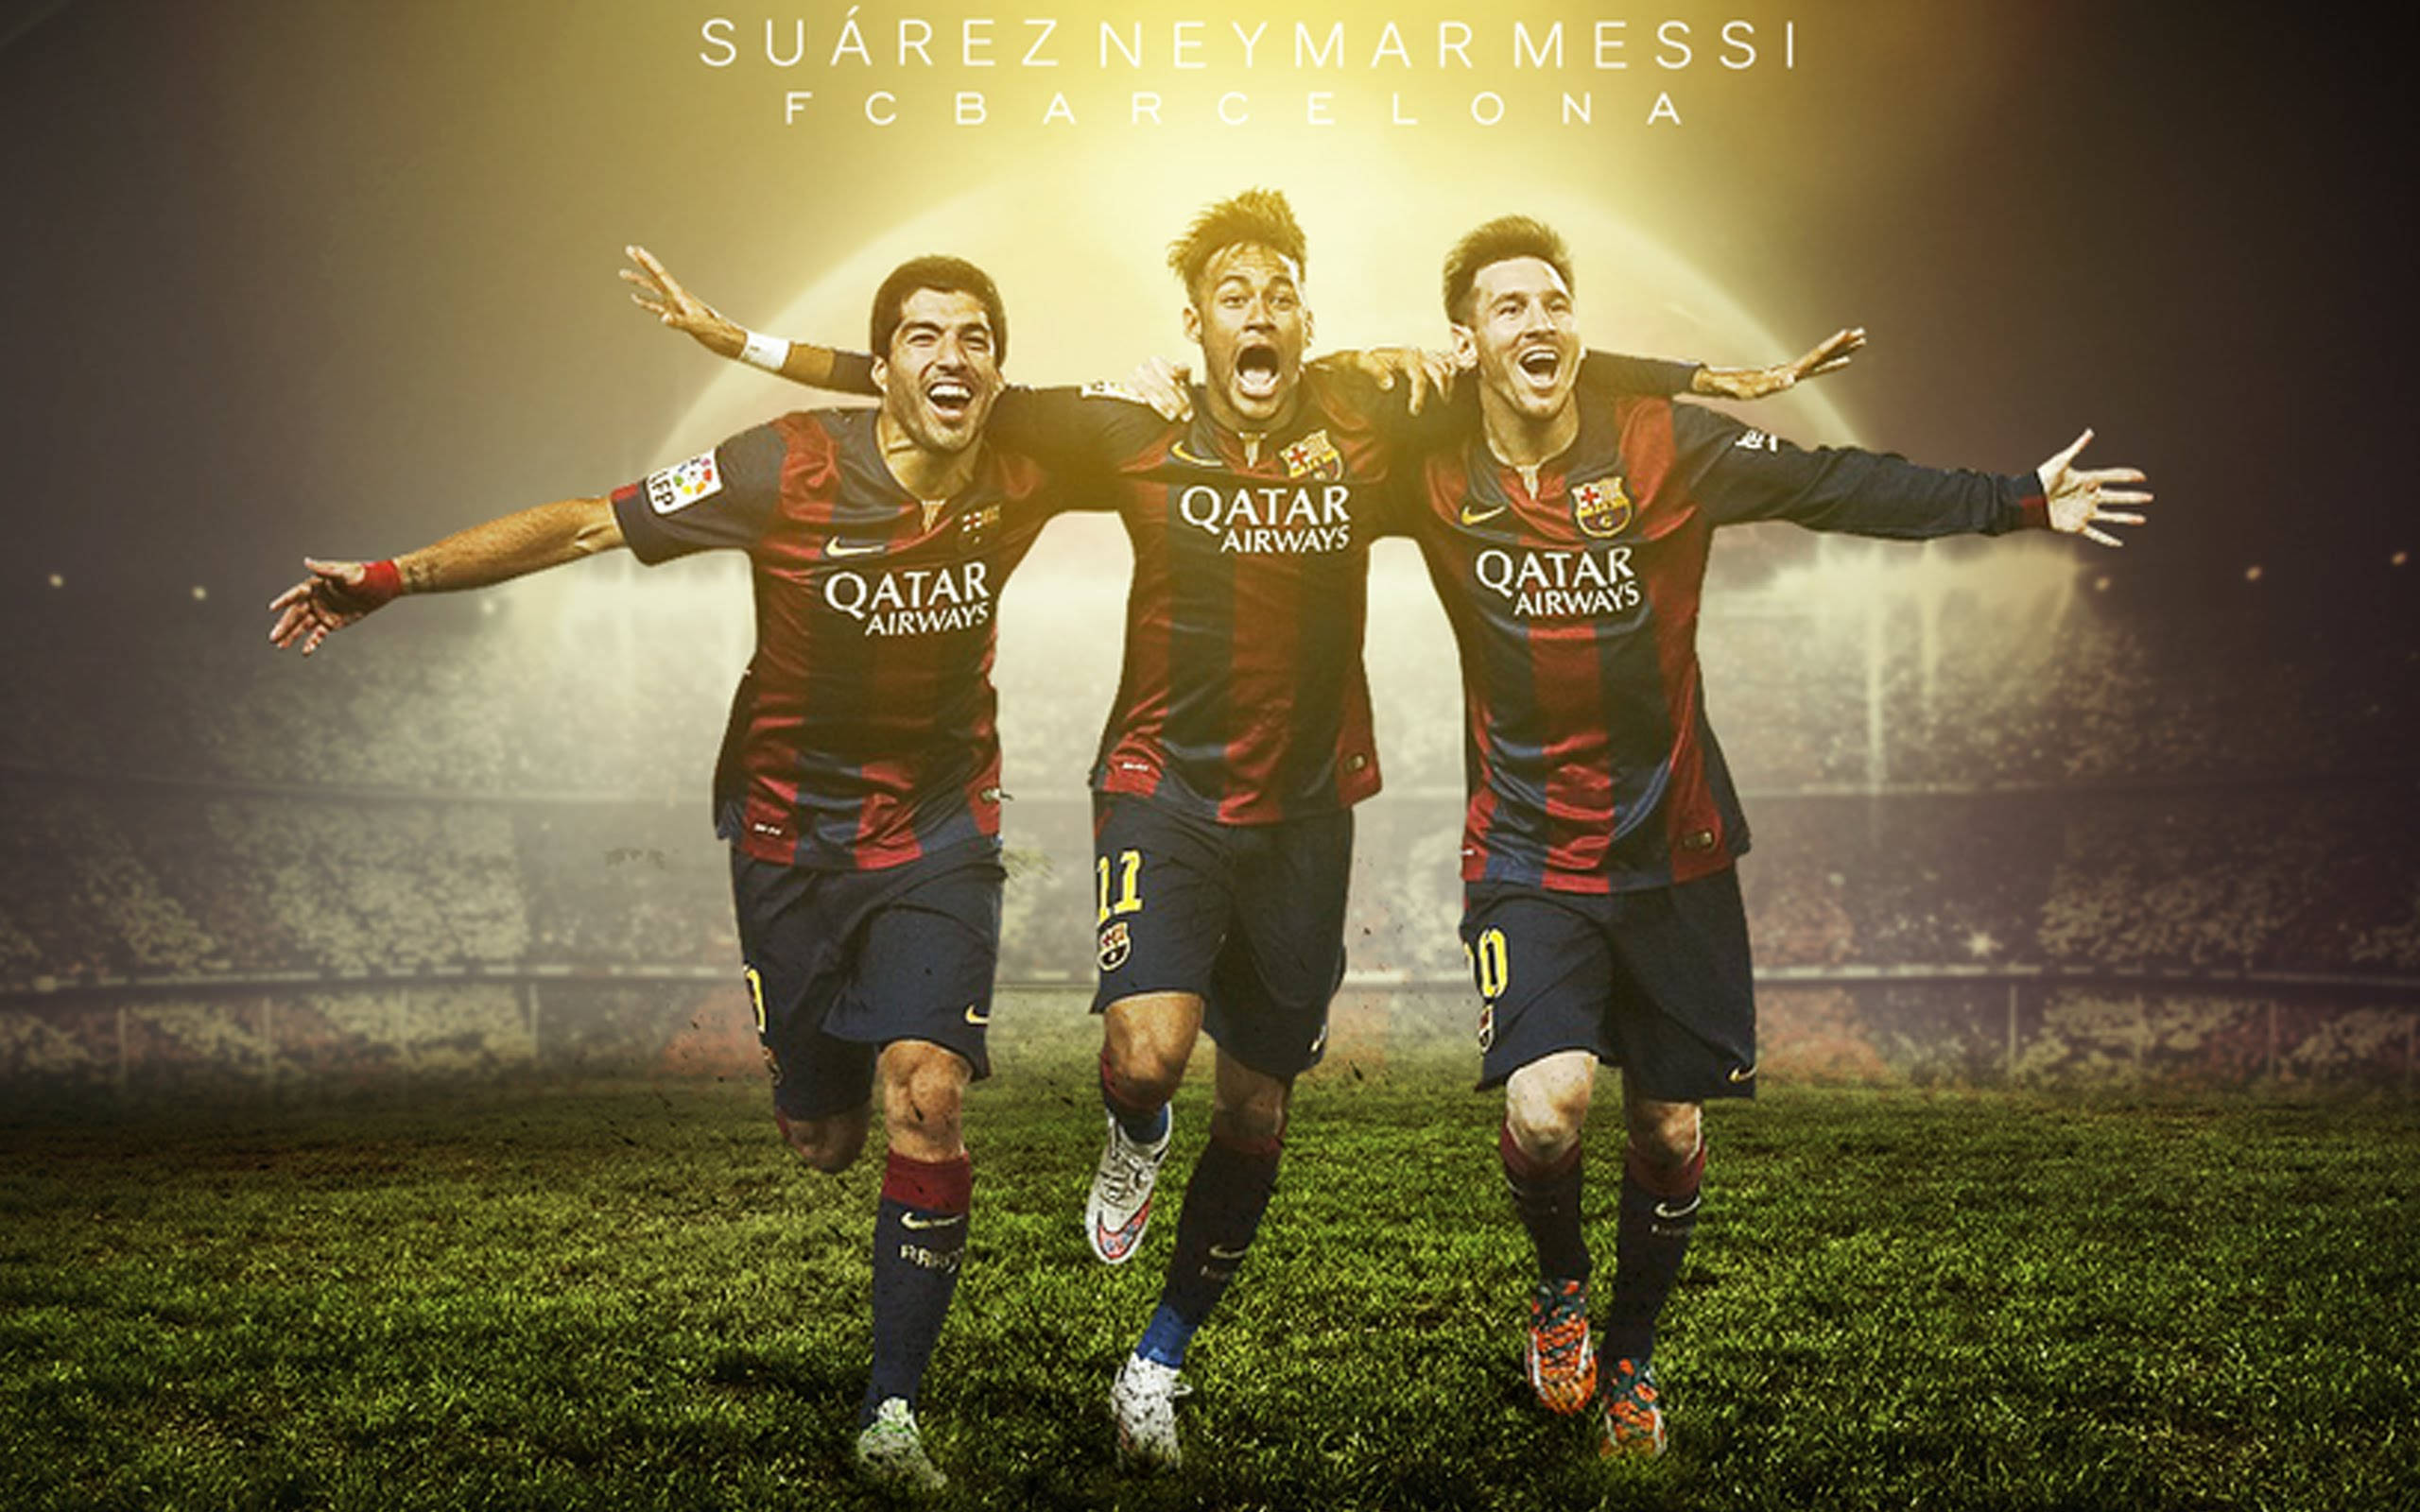 Hình nền cỗ 3 MNS Messi Neymar Suarez